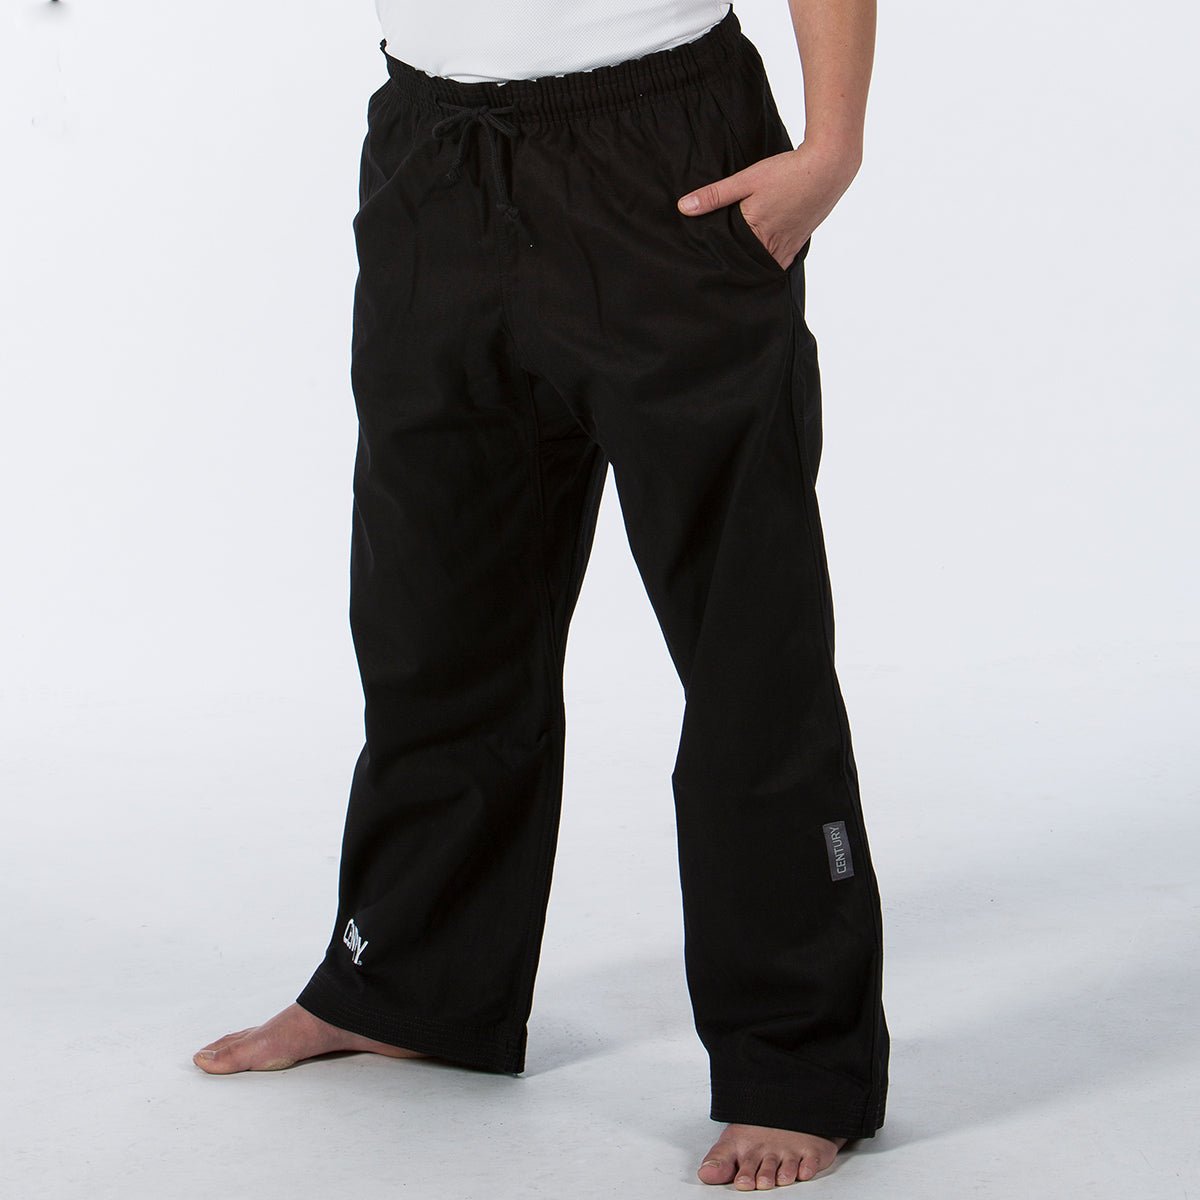 Century 8oz Middleweight Contact Martial Arts Karate Pants | eBay